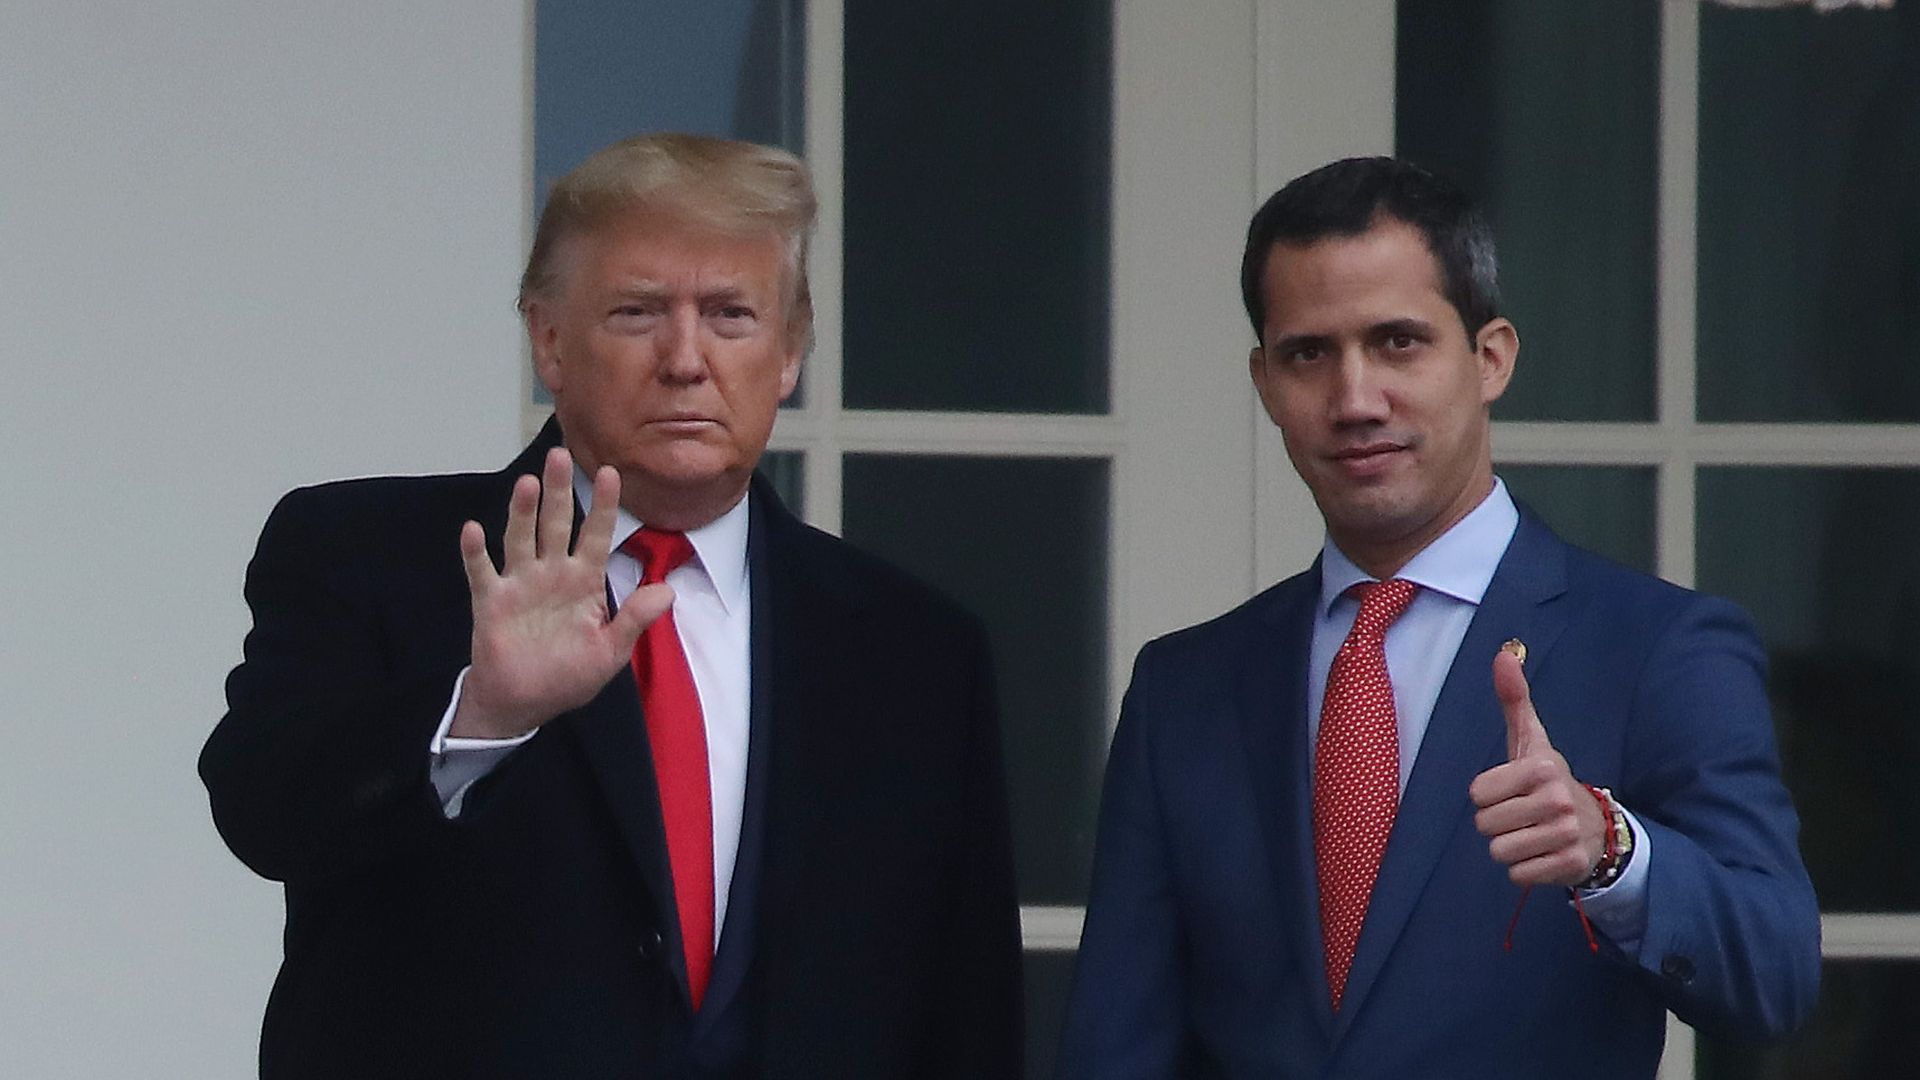 Trump and Juan Guiado